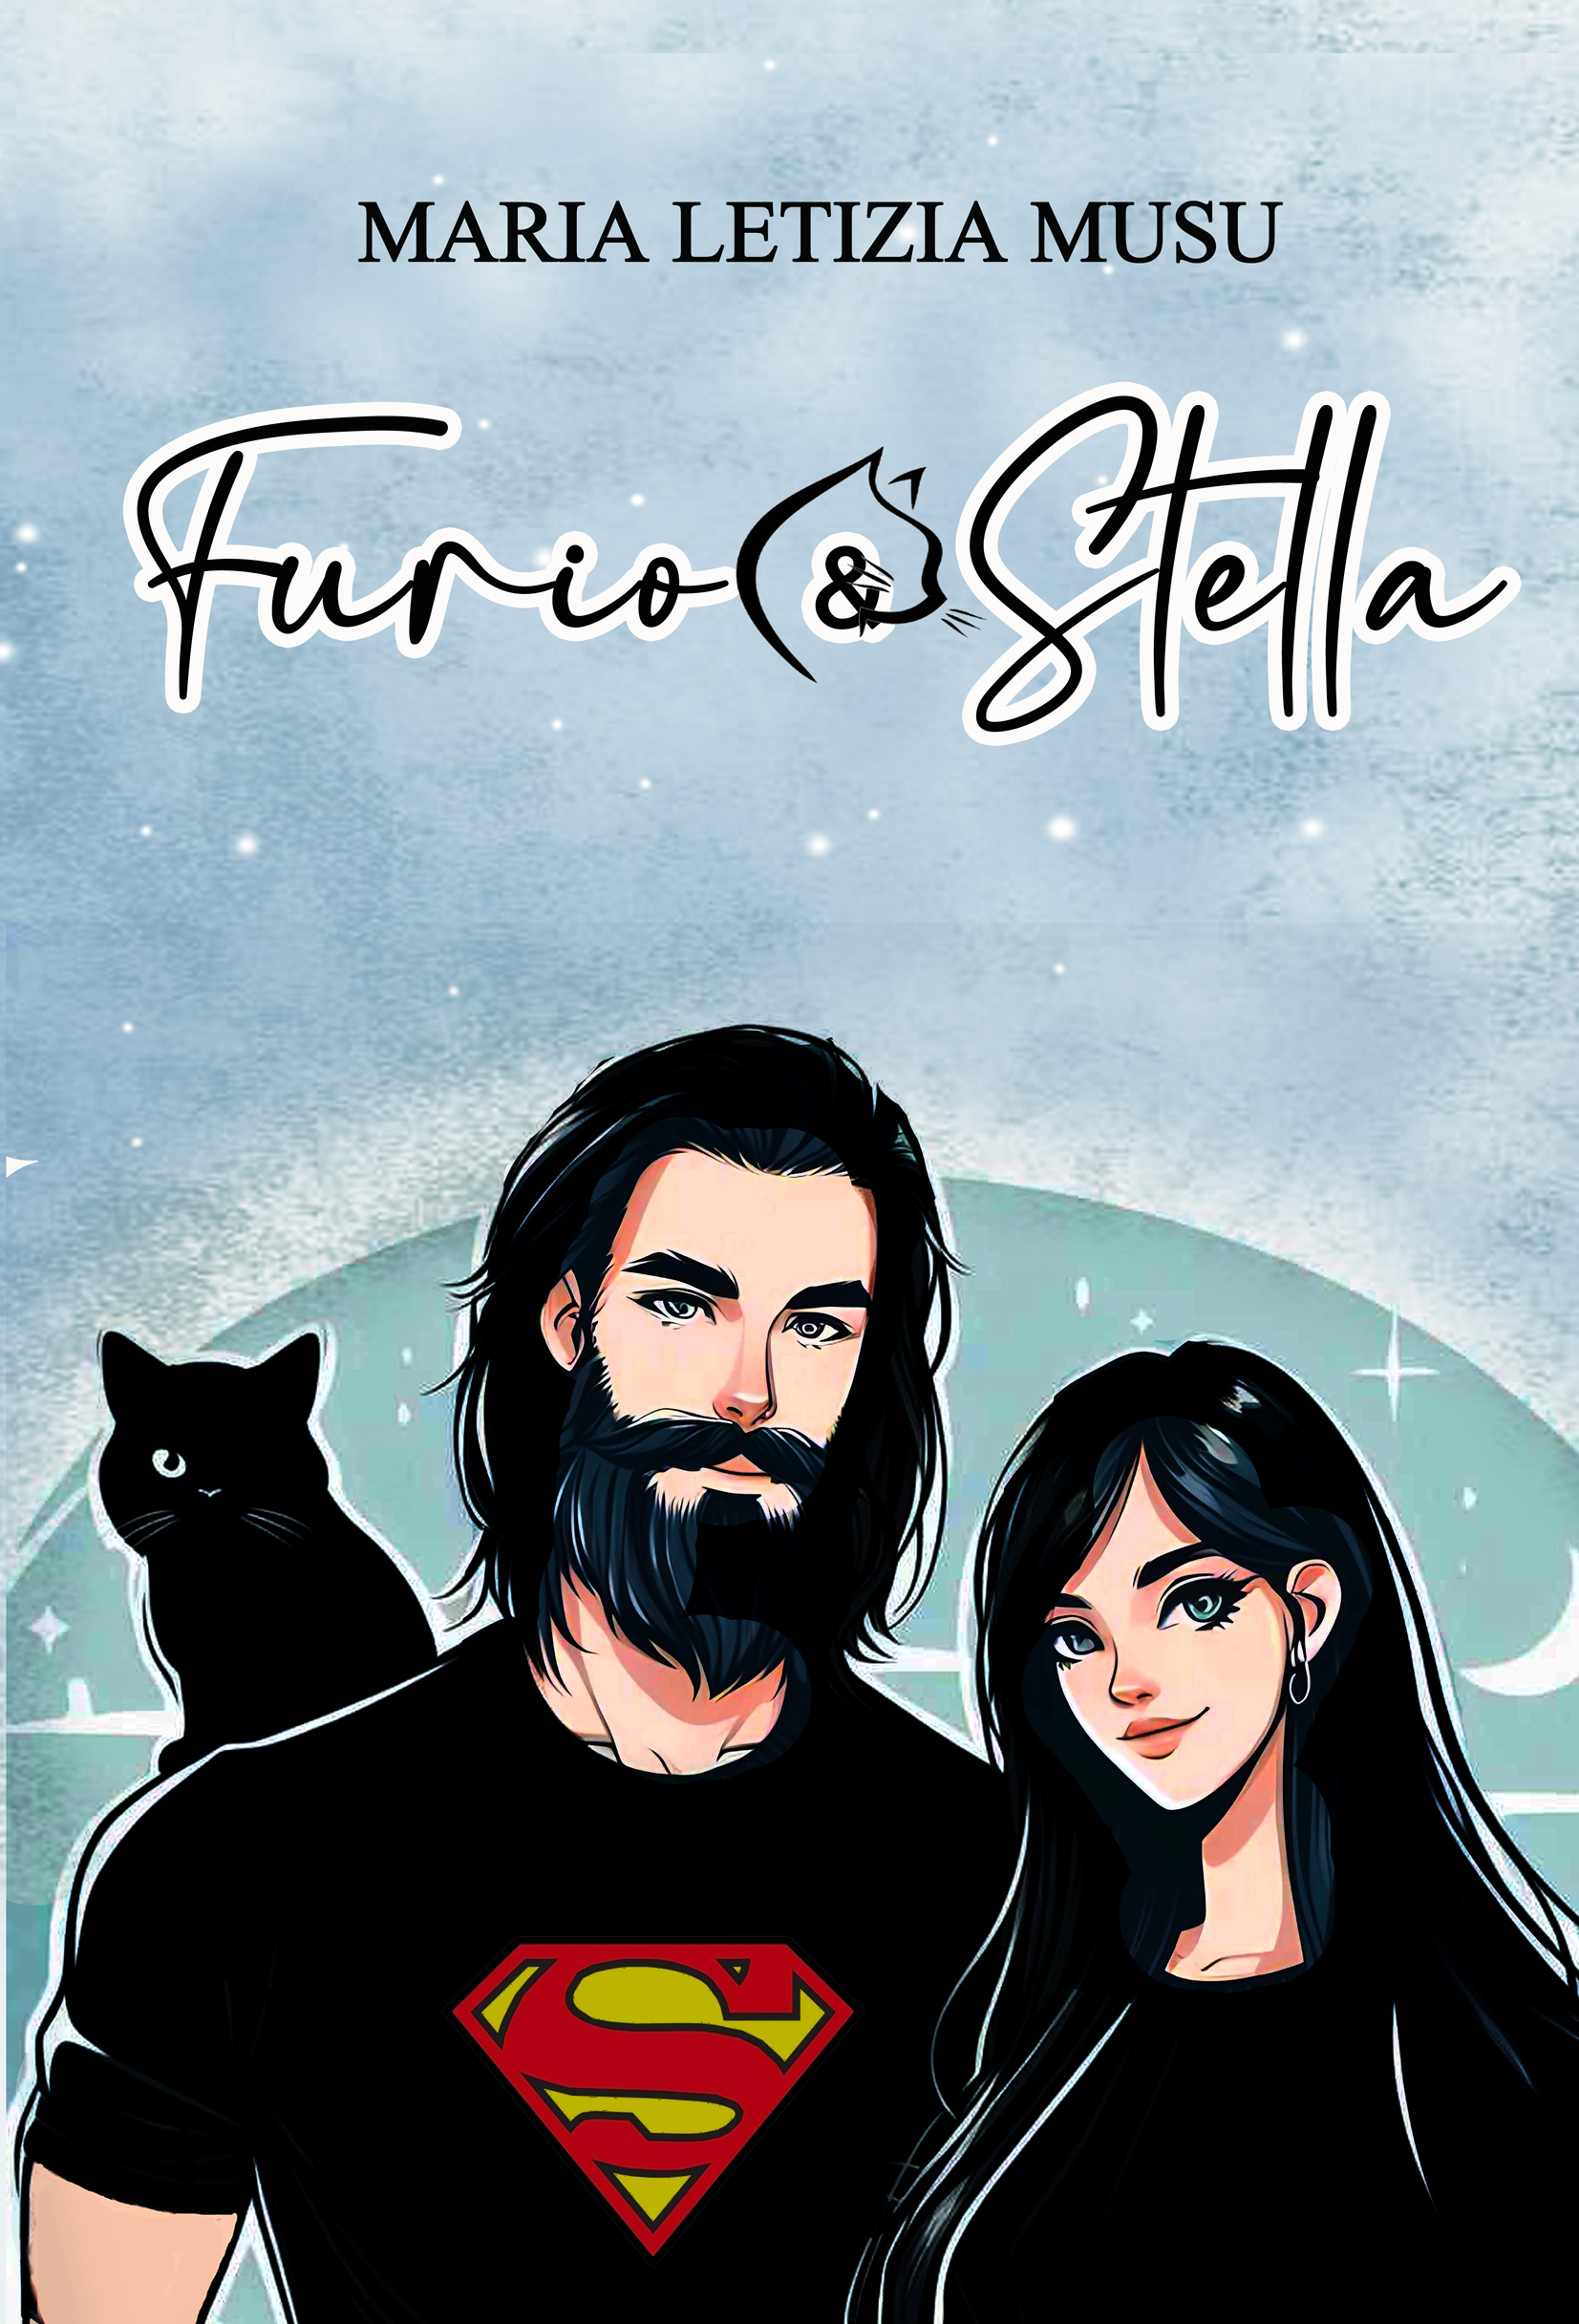 Furio & Stella